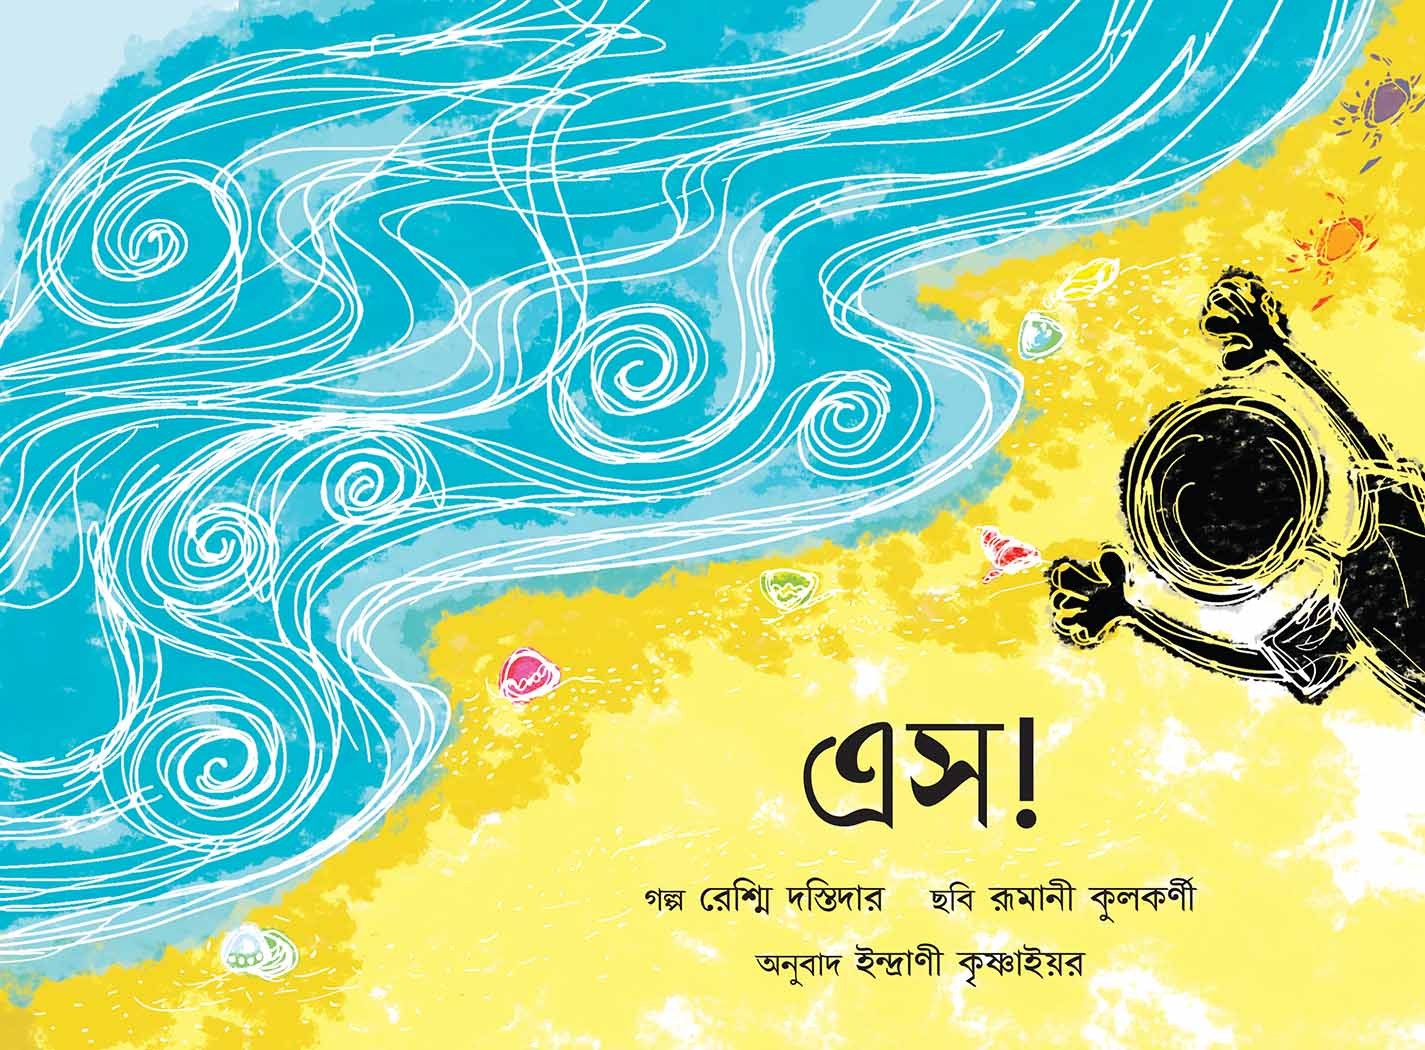 Come!/Esho! (Bengali)